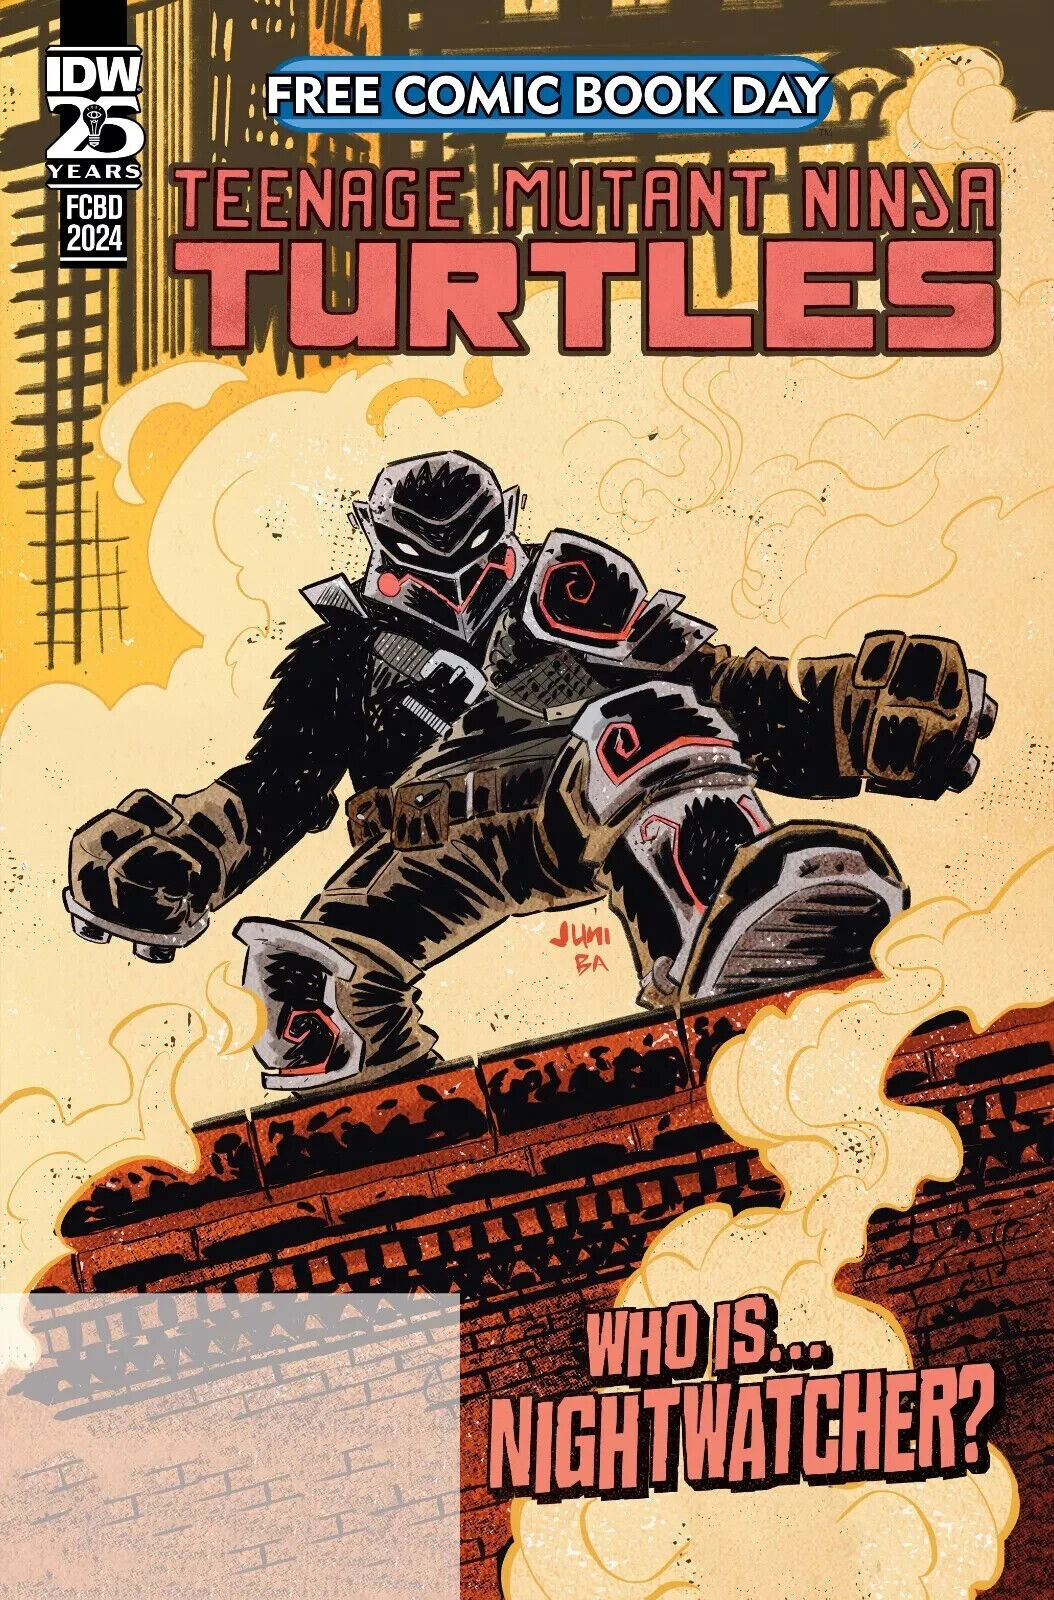 FCBD 2024: Teenage Mutant Ninja Turtles 1 Free Comic Book Day